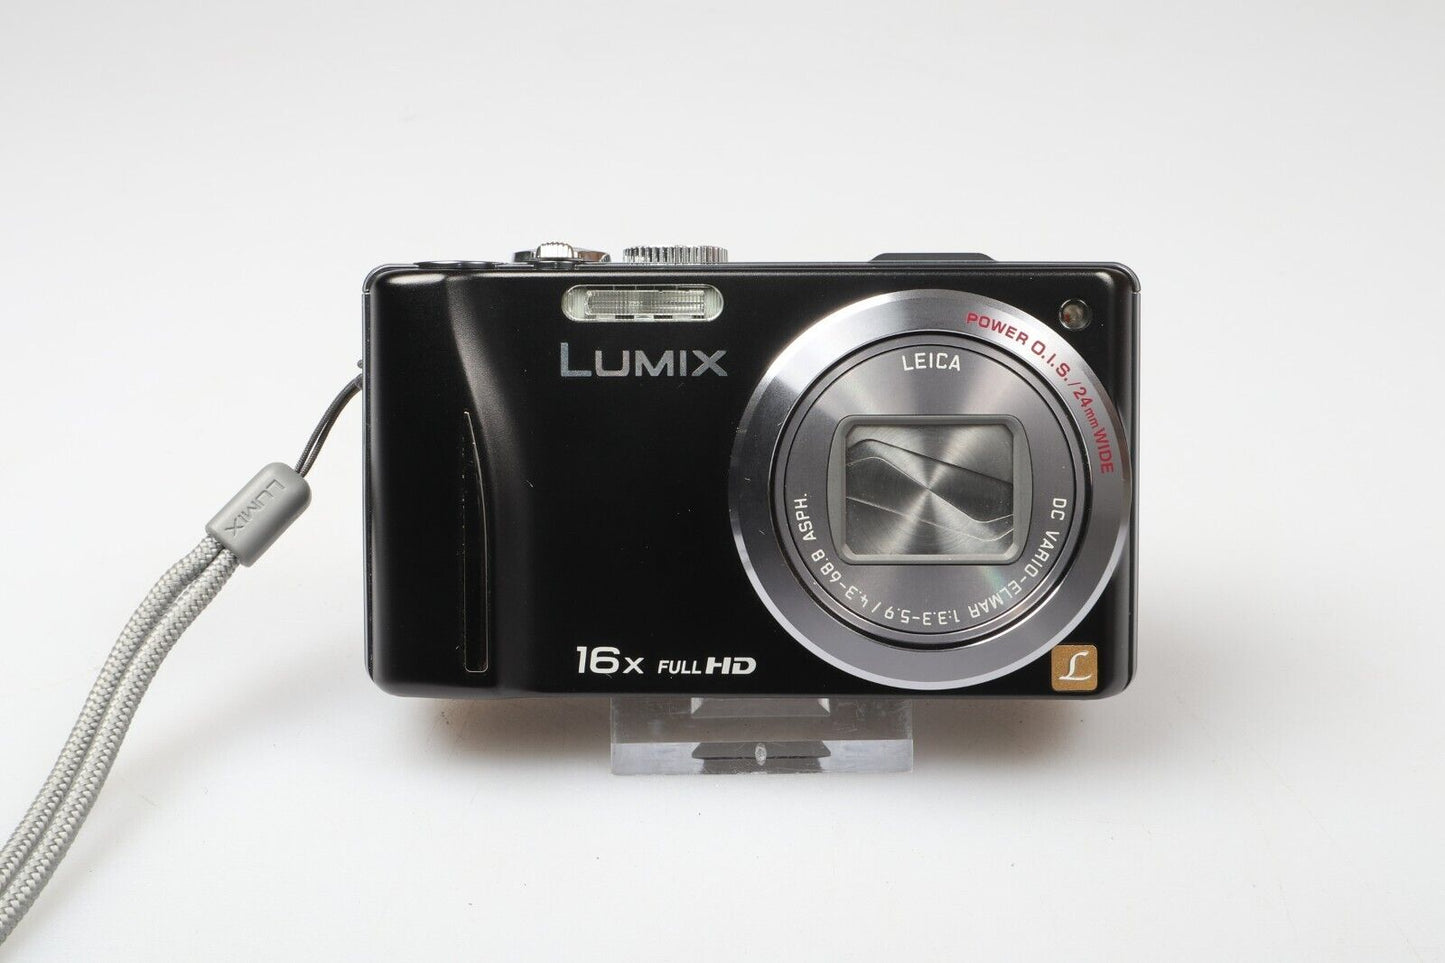 Panasonic Lumix DMC-TZ20 | Digital Compact Camera | 14.1MP | Black